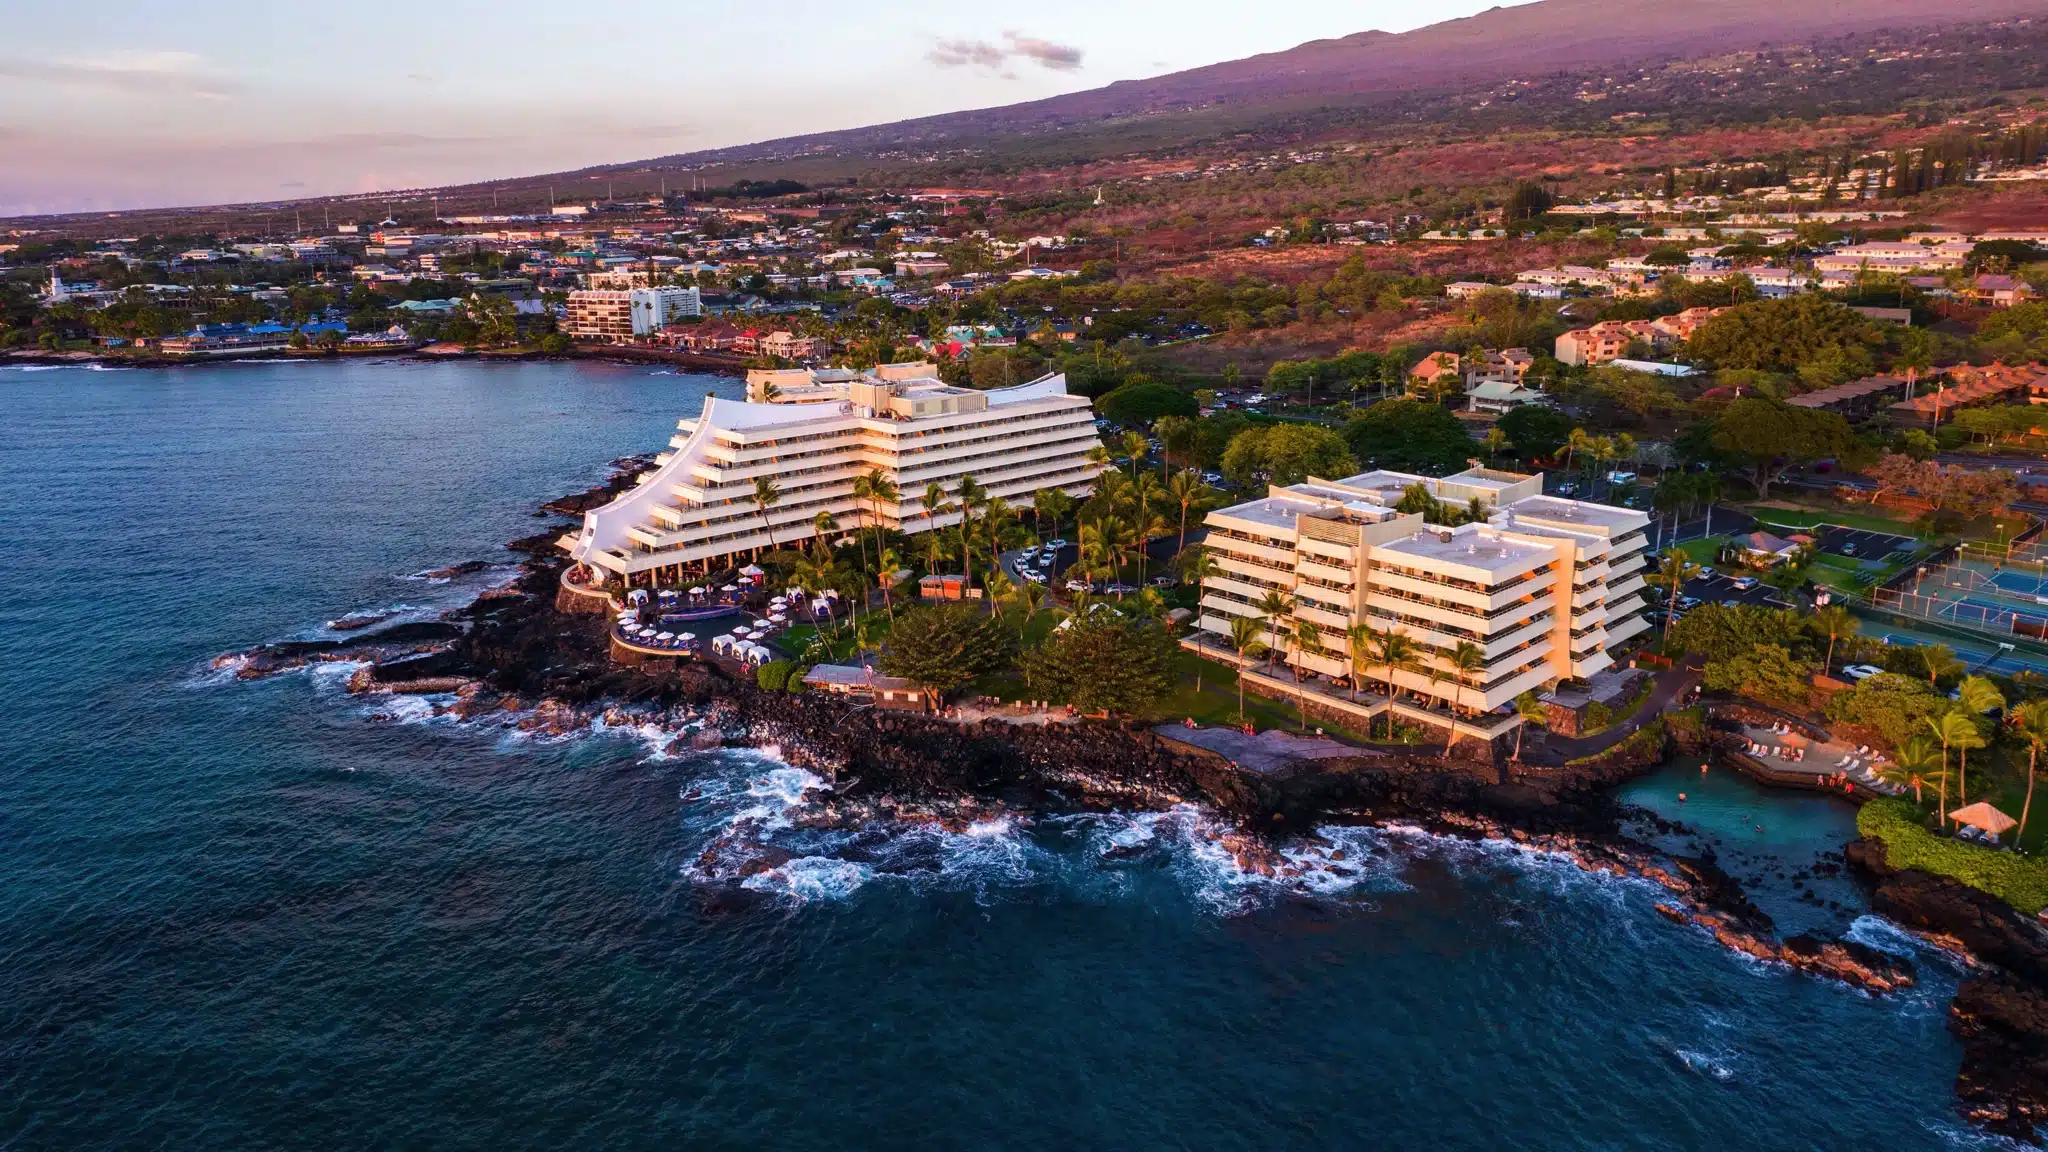 Royal Kona Resort is a Hotel located in the city of Kailua-Kona on Big Island, Hawaii